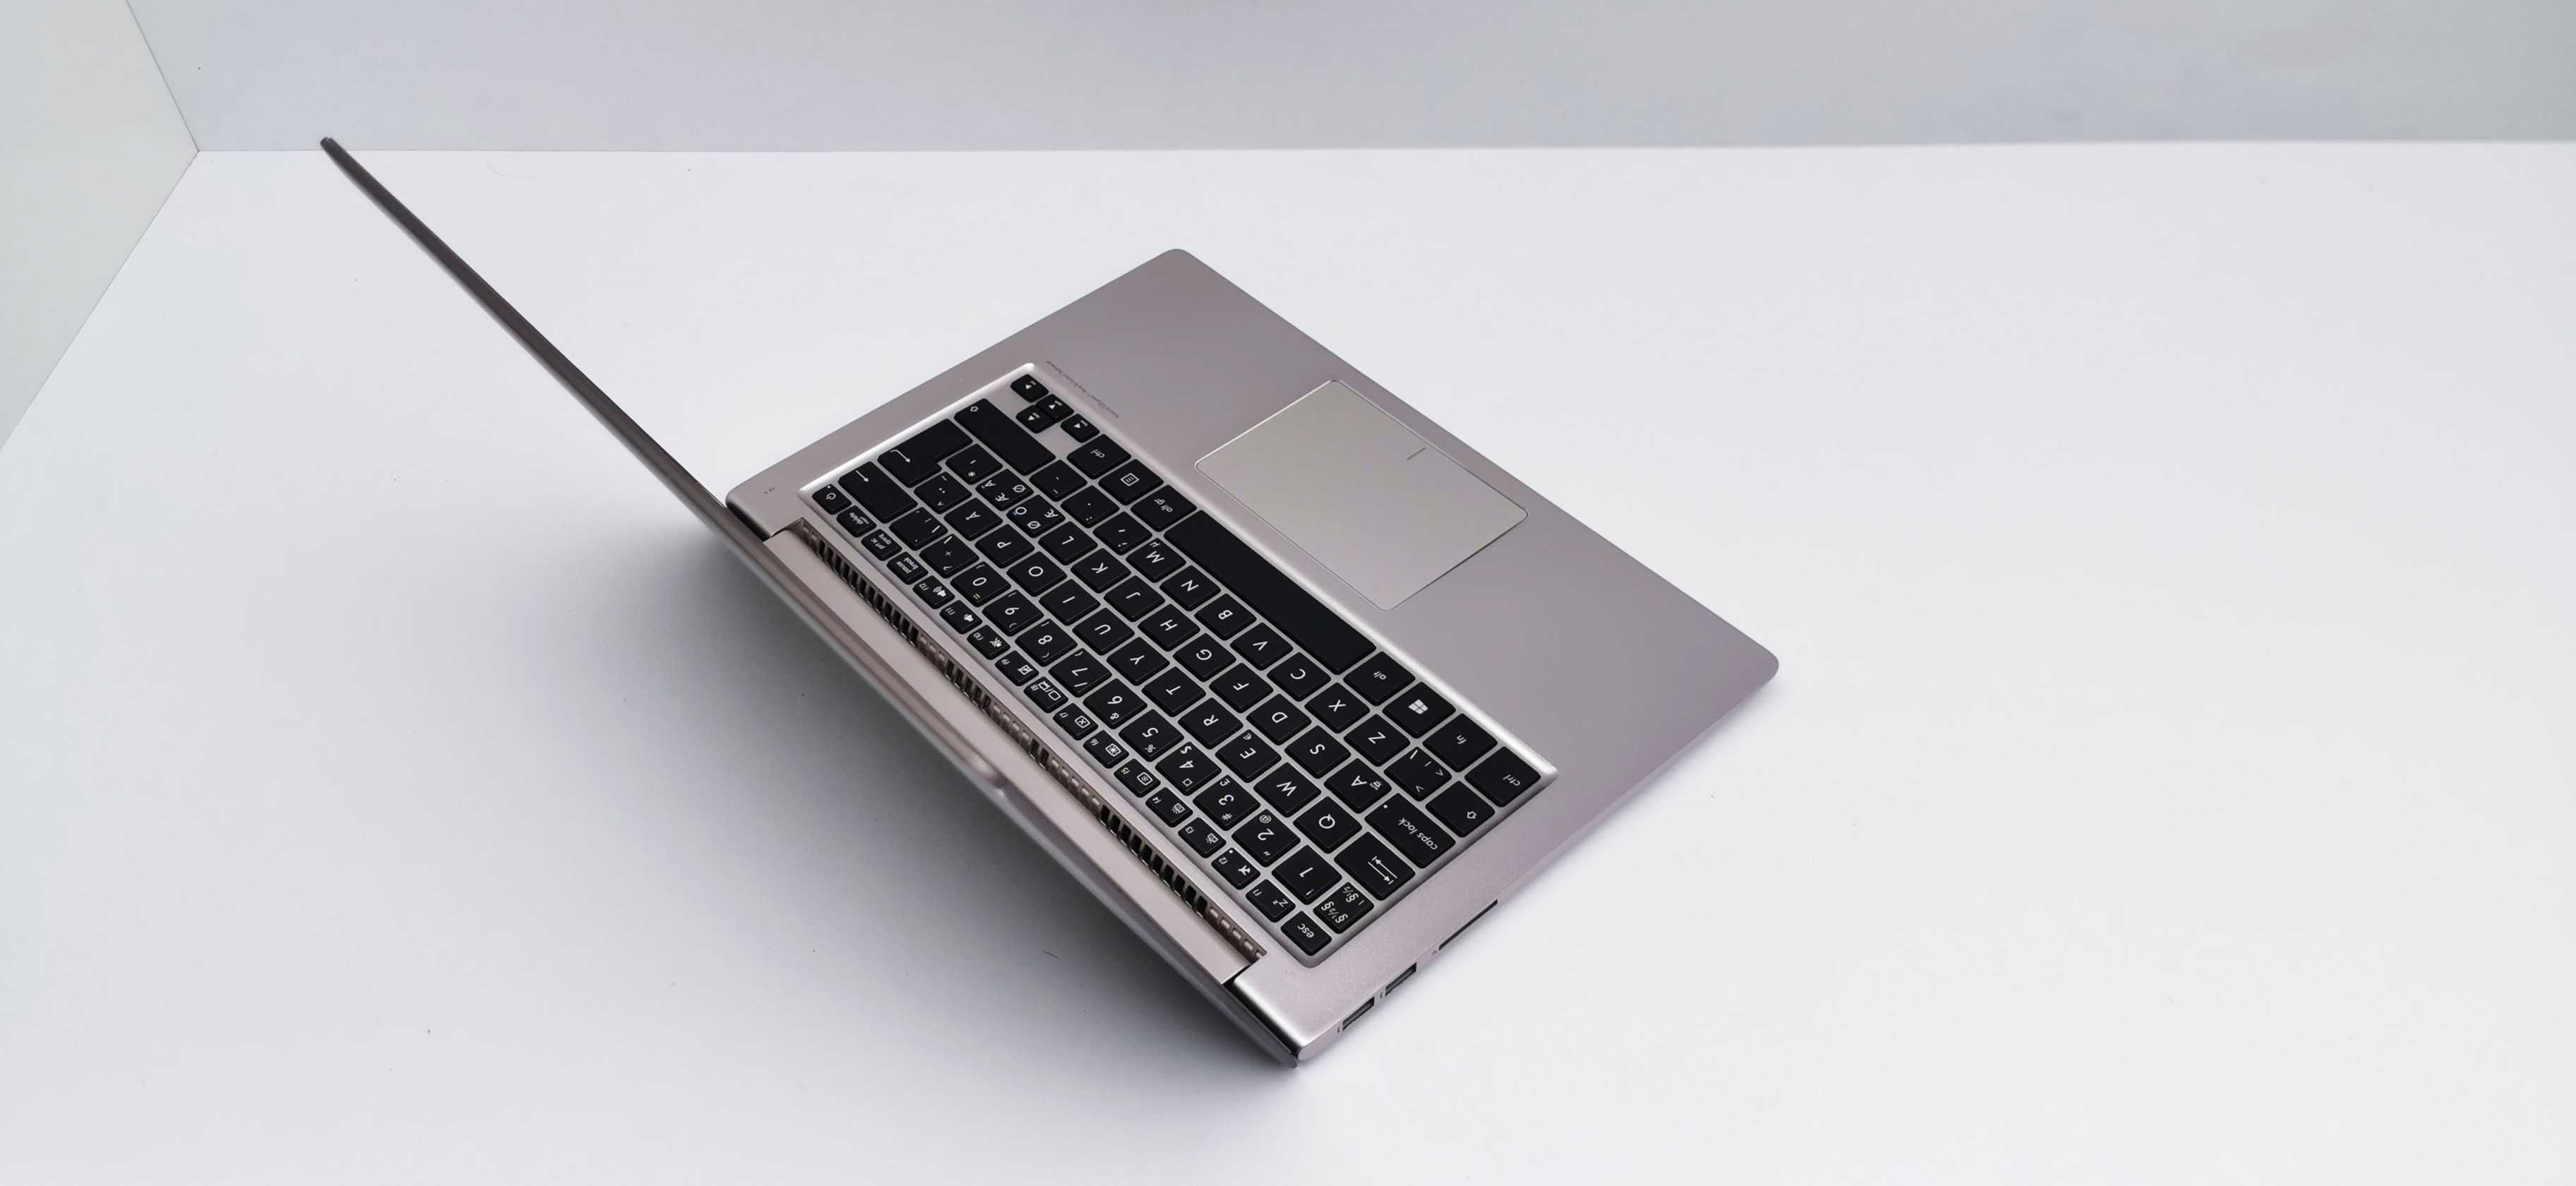 Asus VivoBook 13.3" i7 5500U nVidia GeForce - configurabil la cerere